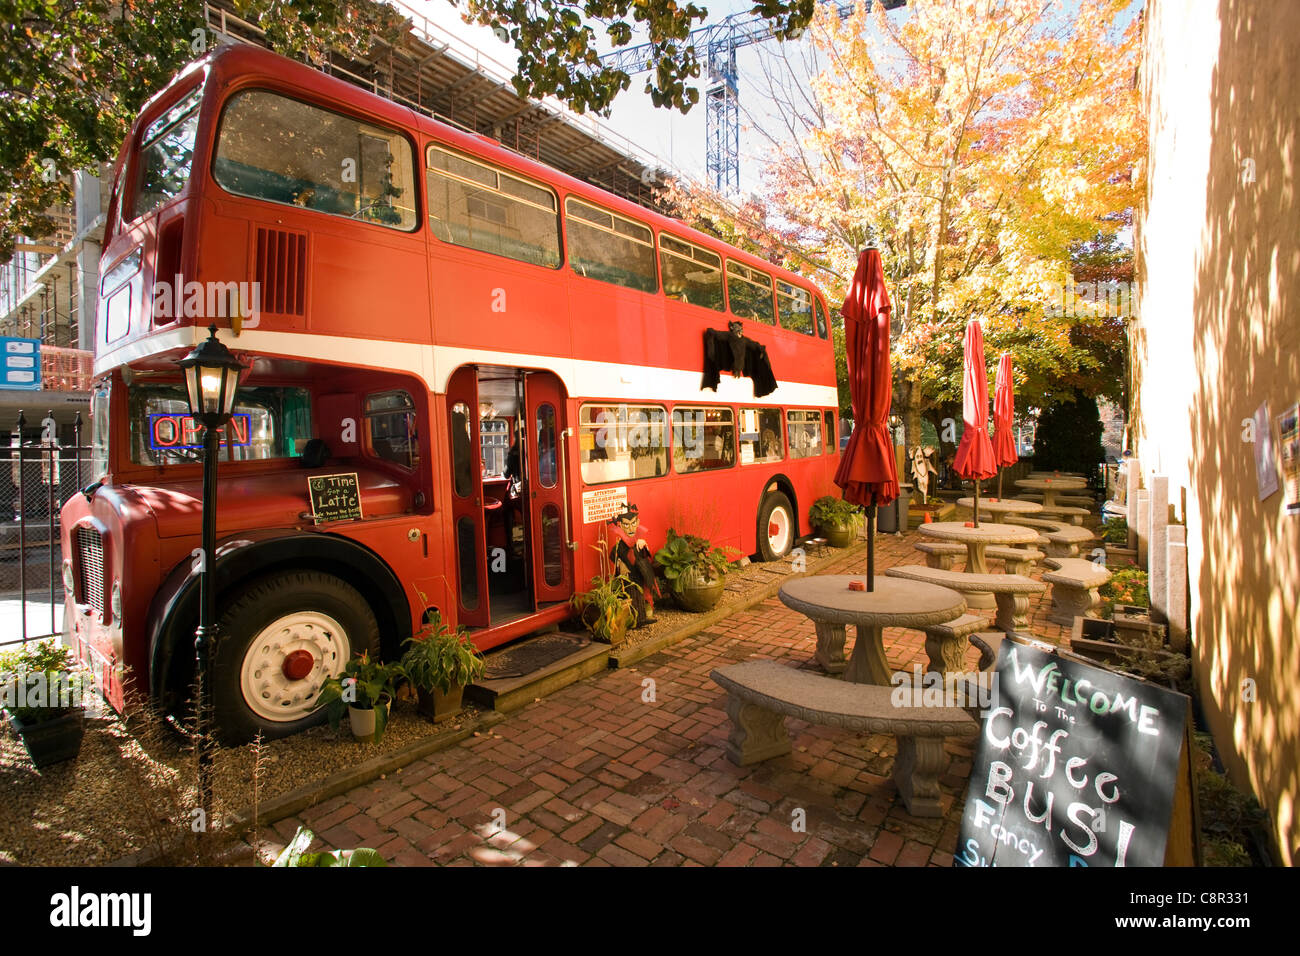 Coffee Bus - Asheville, North Carolina USA Stock Photo